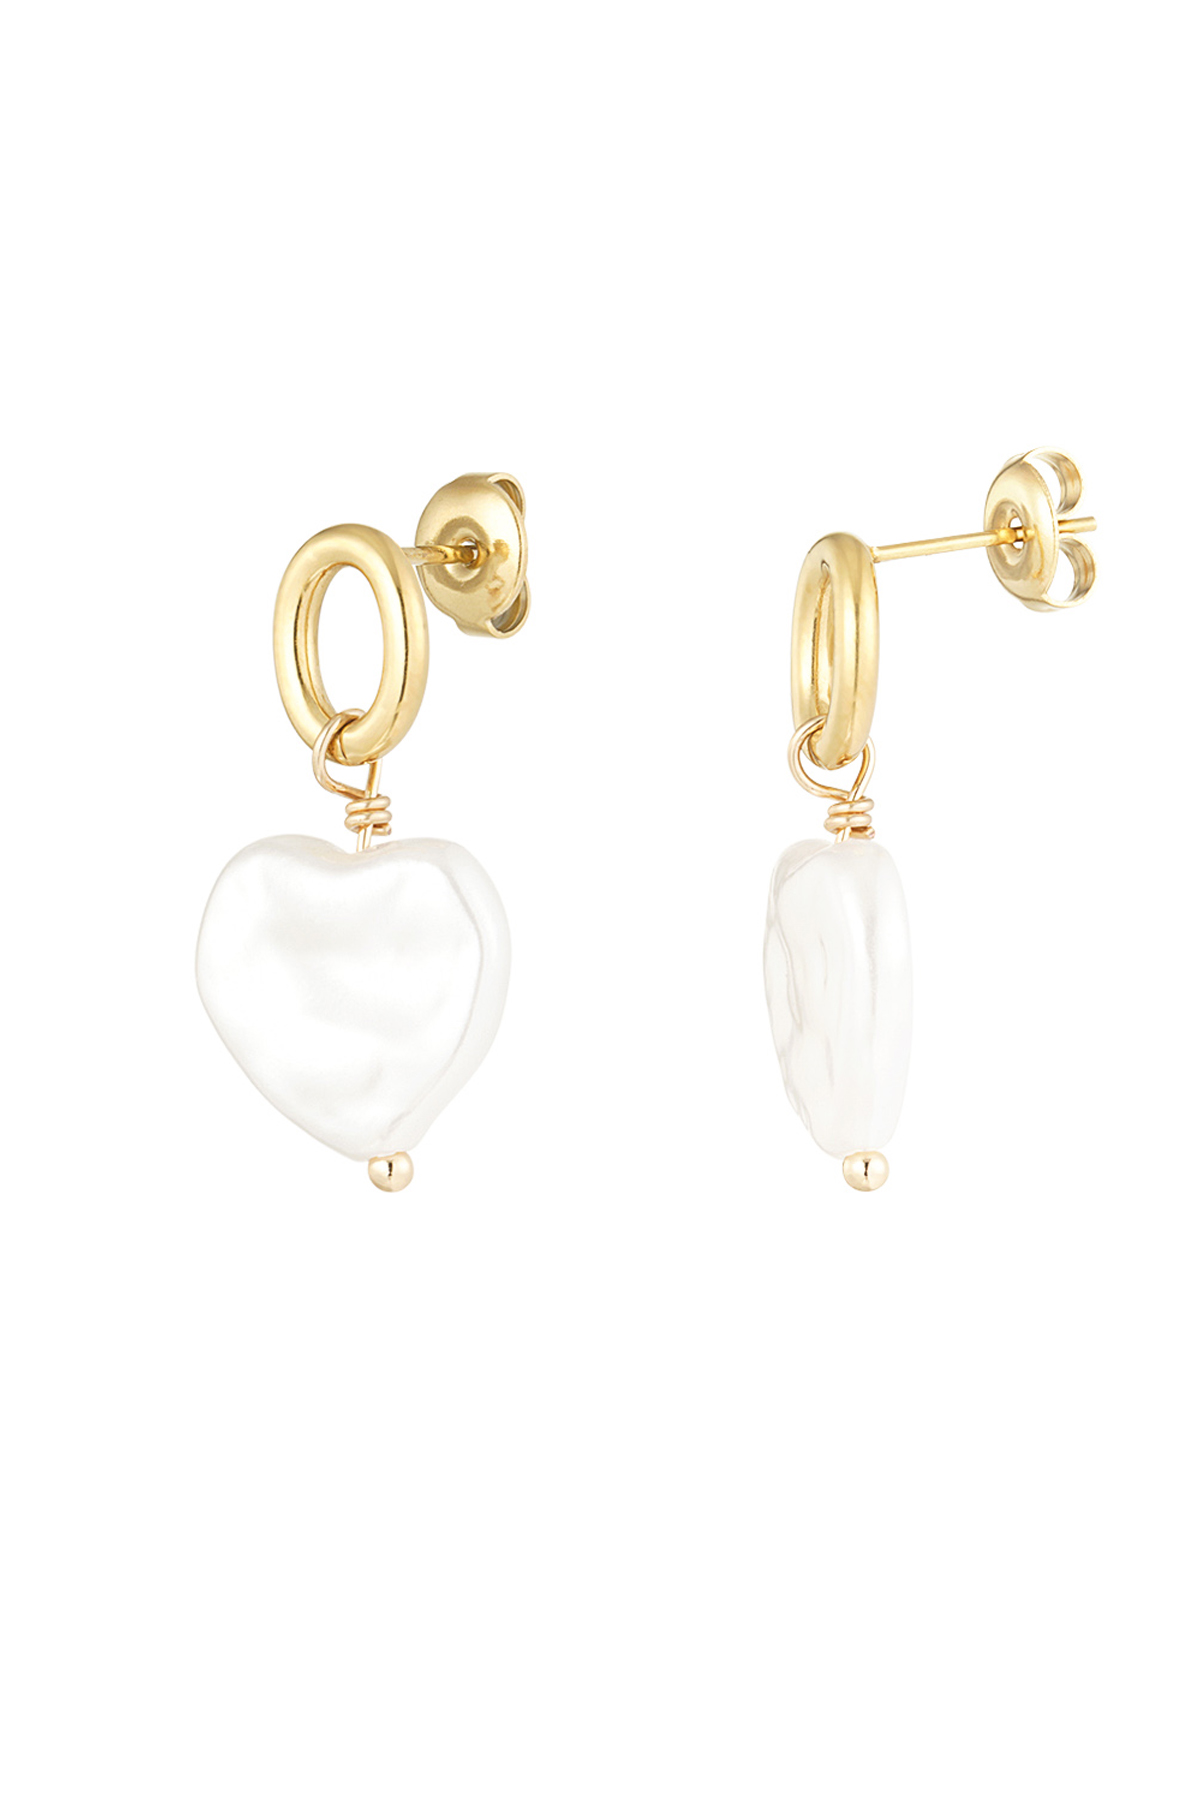 Ohrring mit Perle in Herzform – Gold